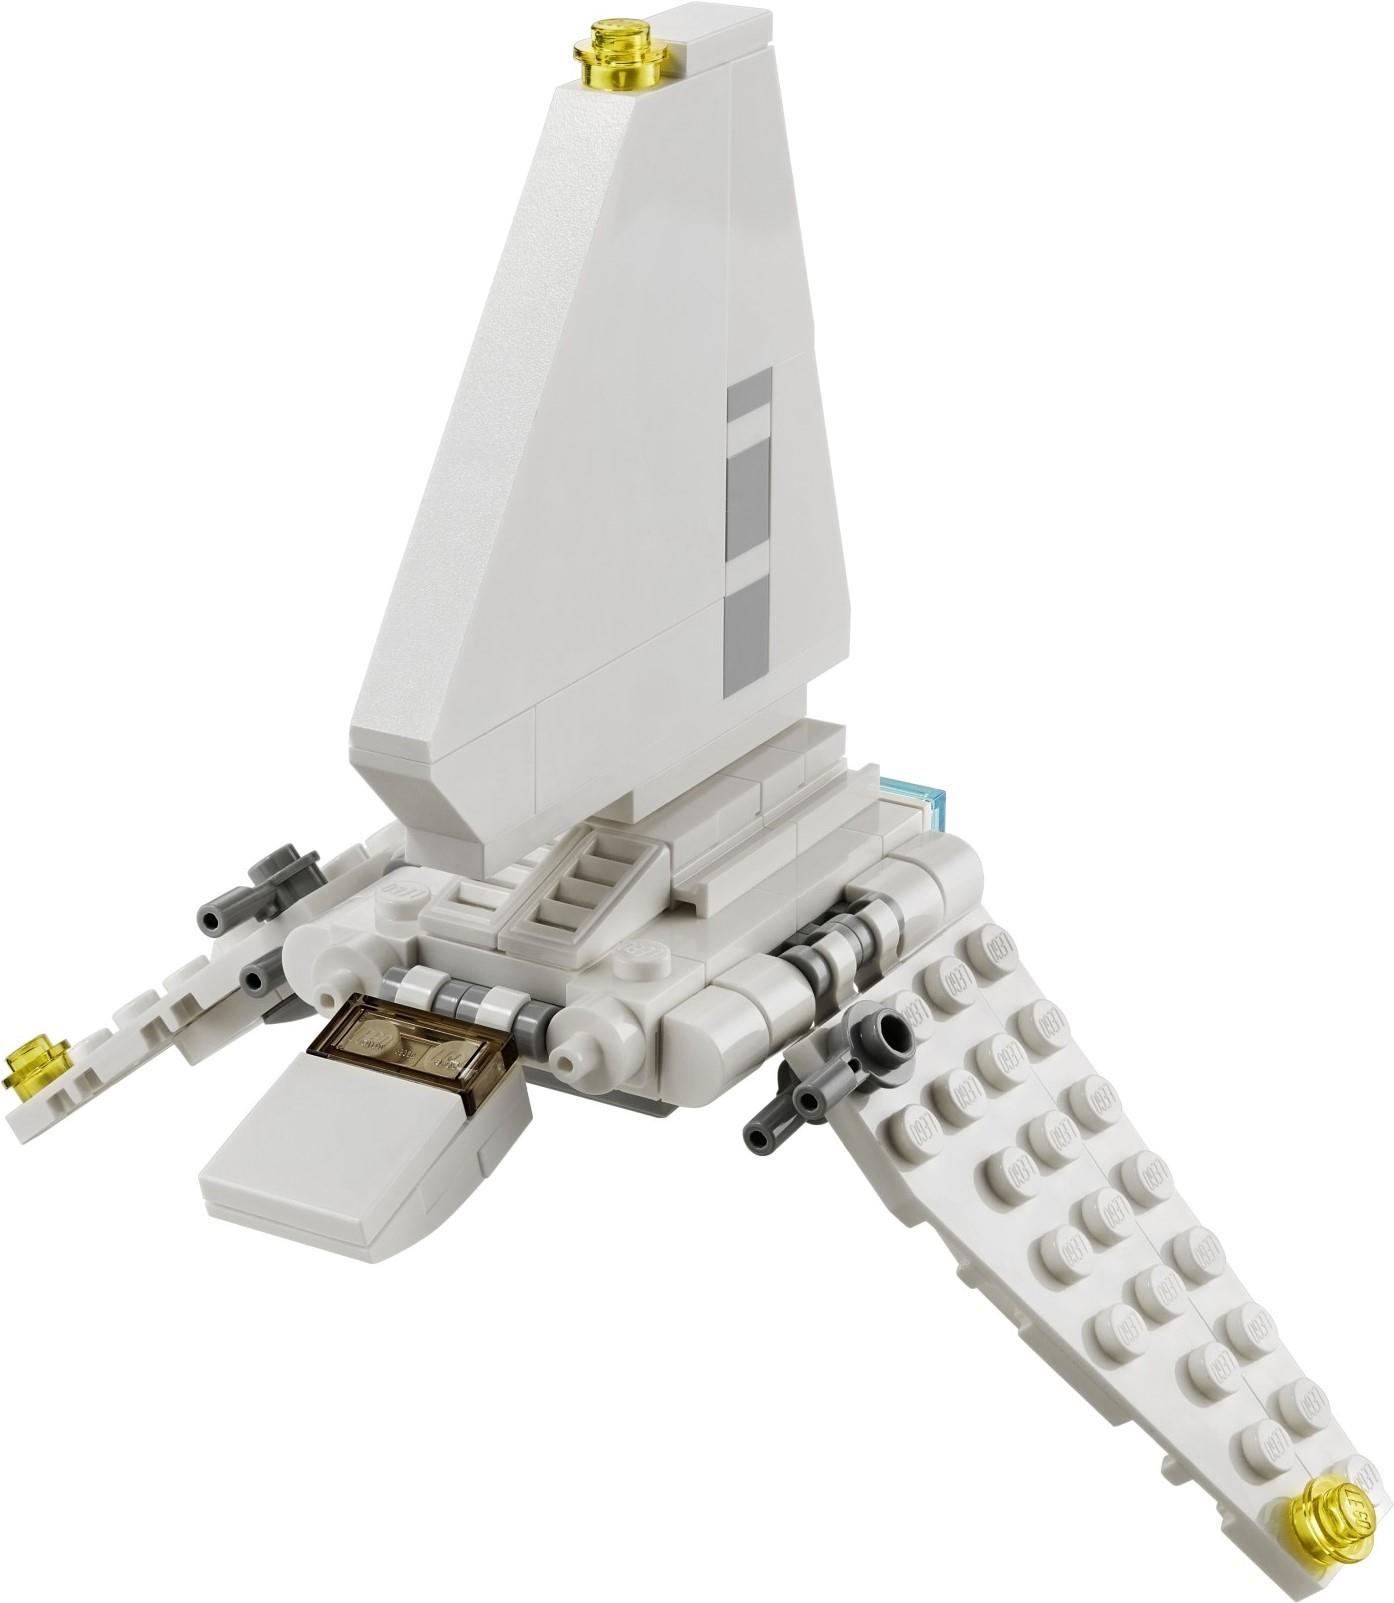 Star Wars Imperial Shuttle BrickEconomy